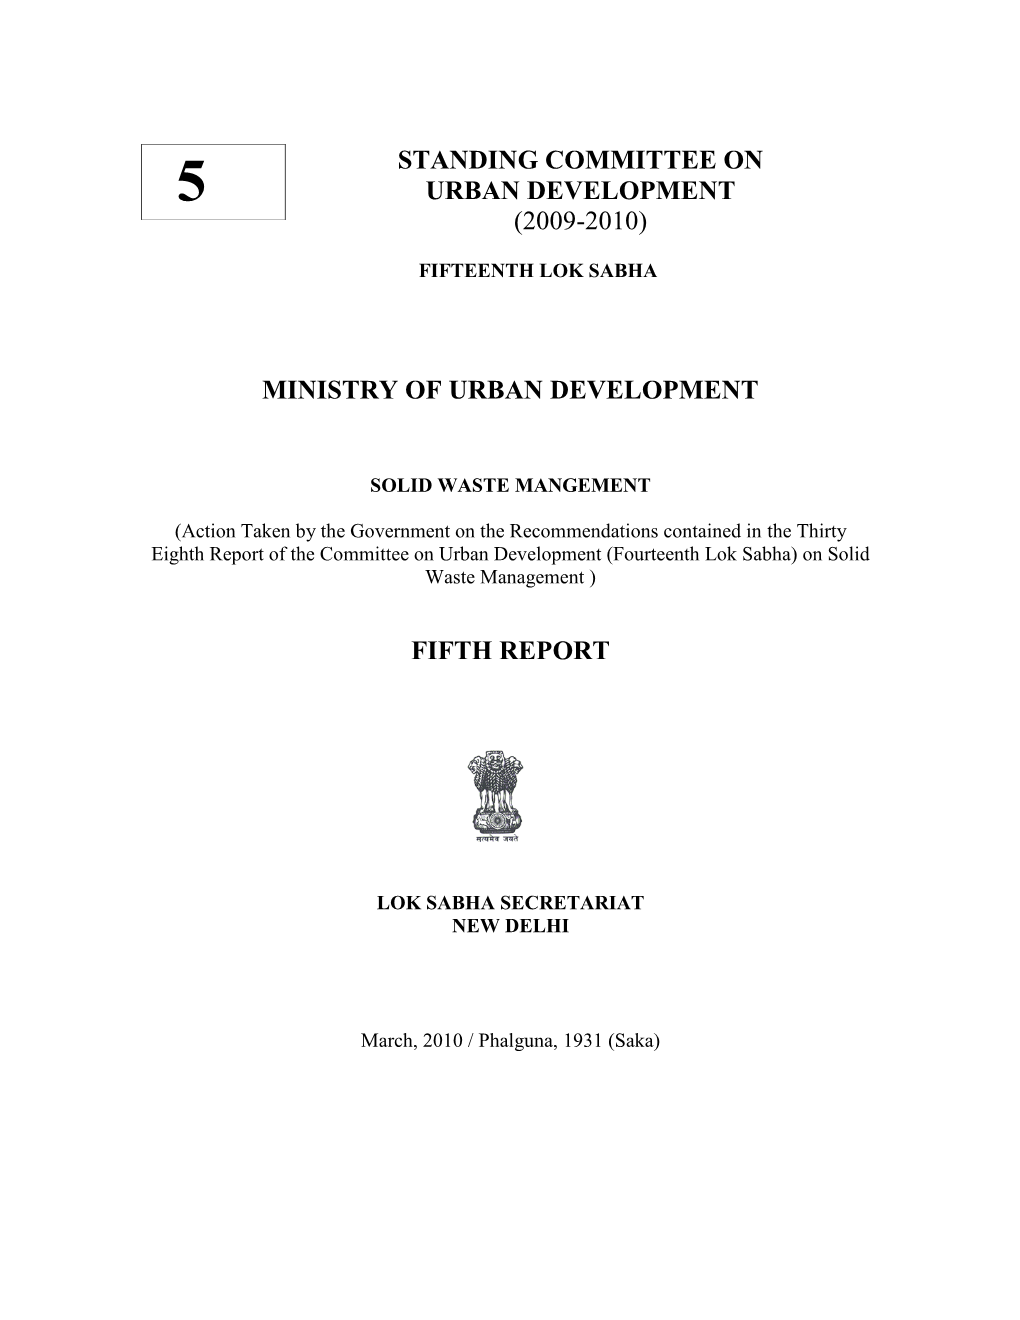 Standing Committee on Urban Development (2009-2010)